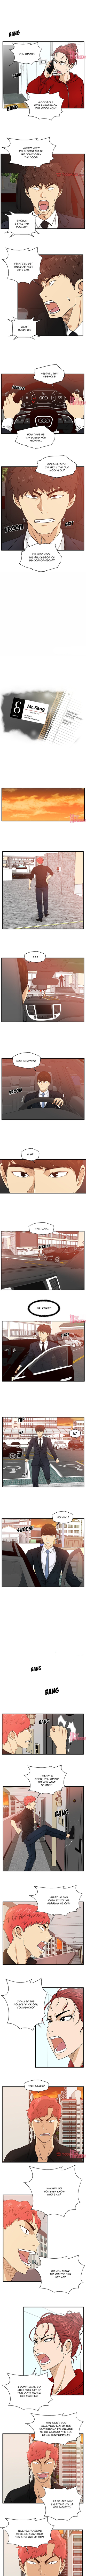 Mr. Kang - Chapter 87 Page 1